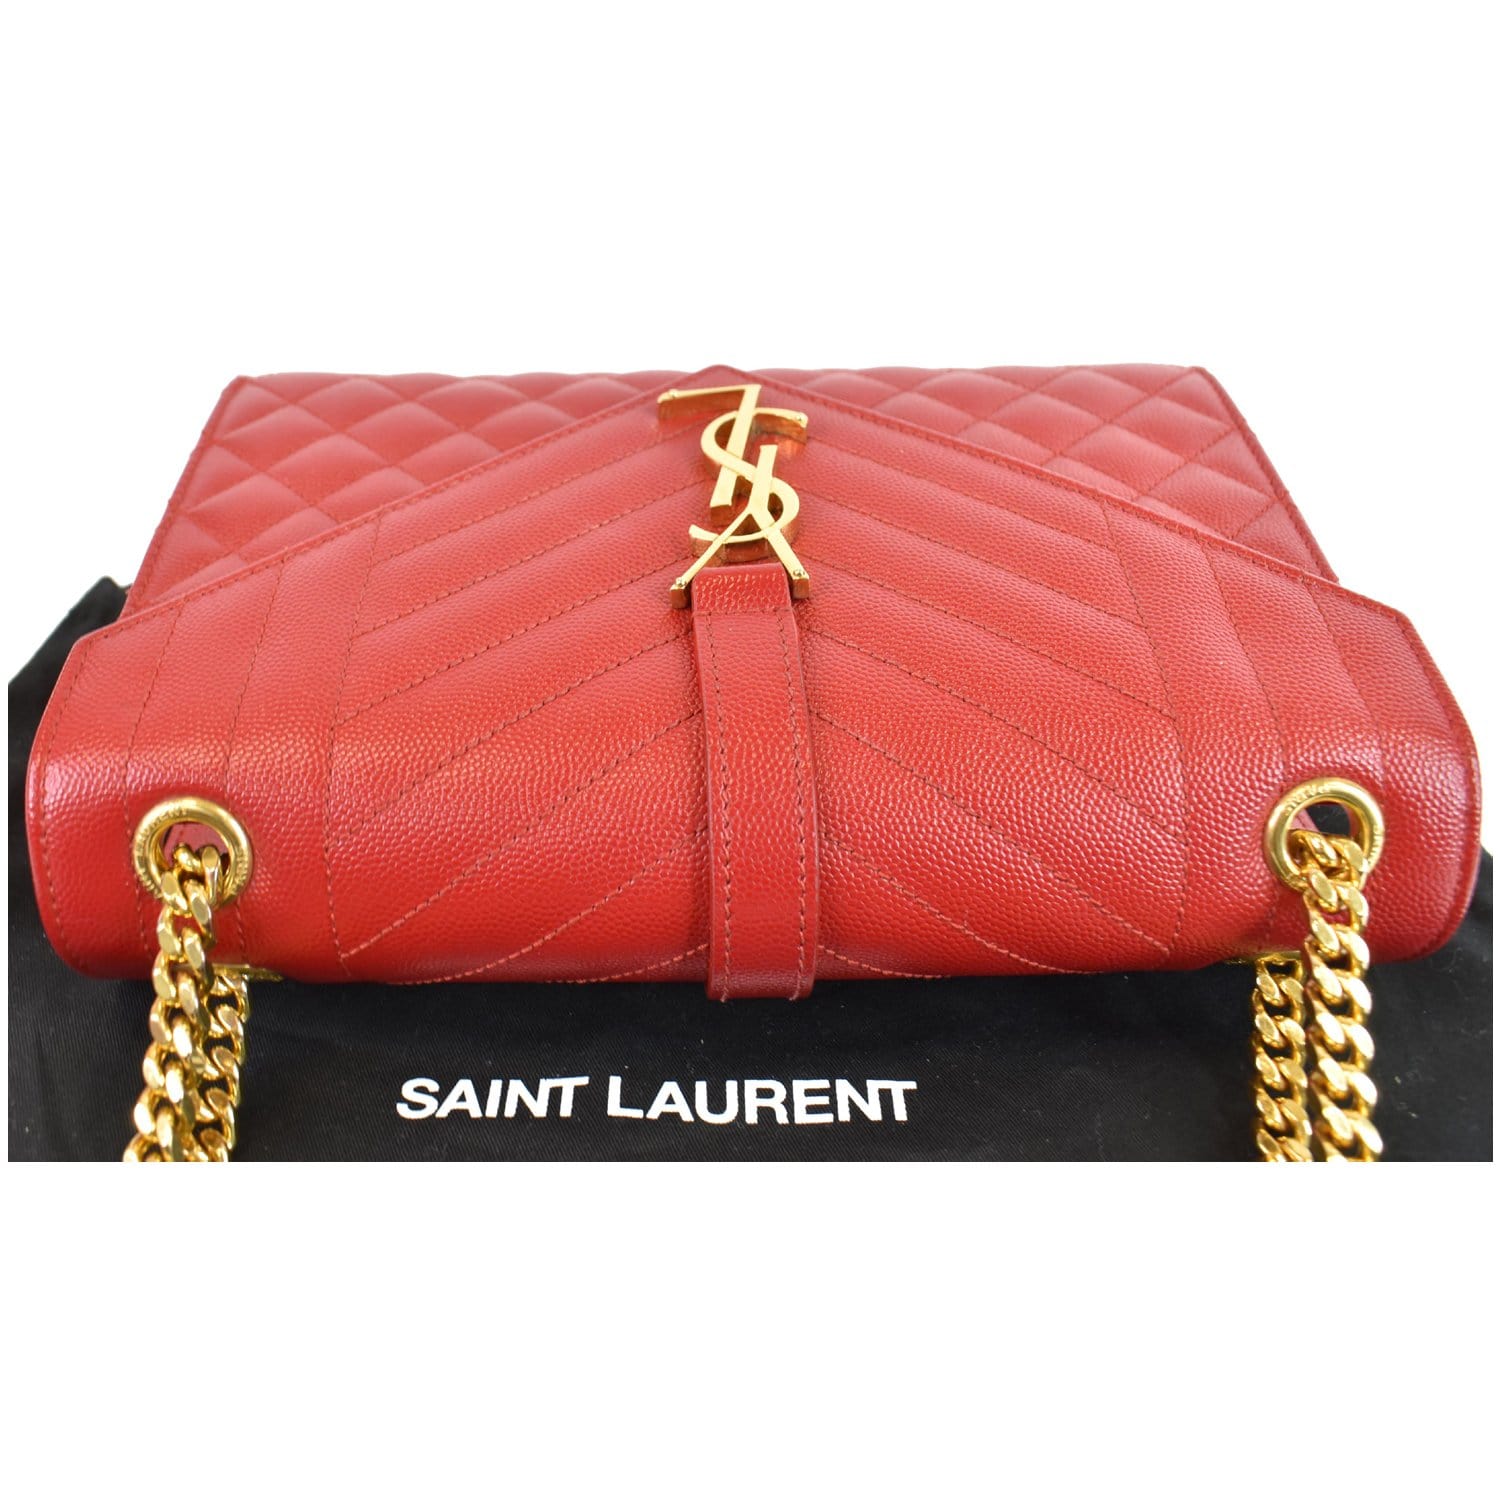 Shop Replica YSL Bags, Fake Yves Saint Laurent Belts, Knockoff